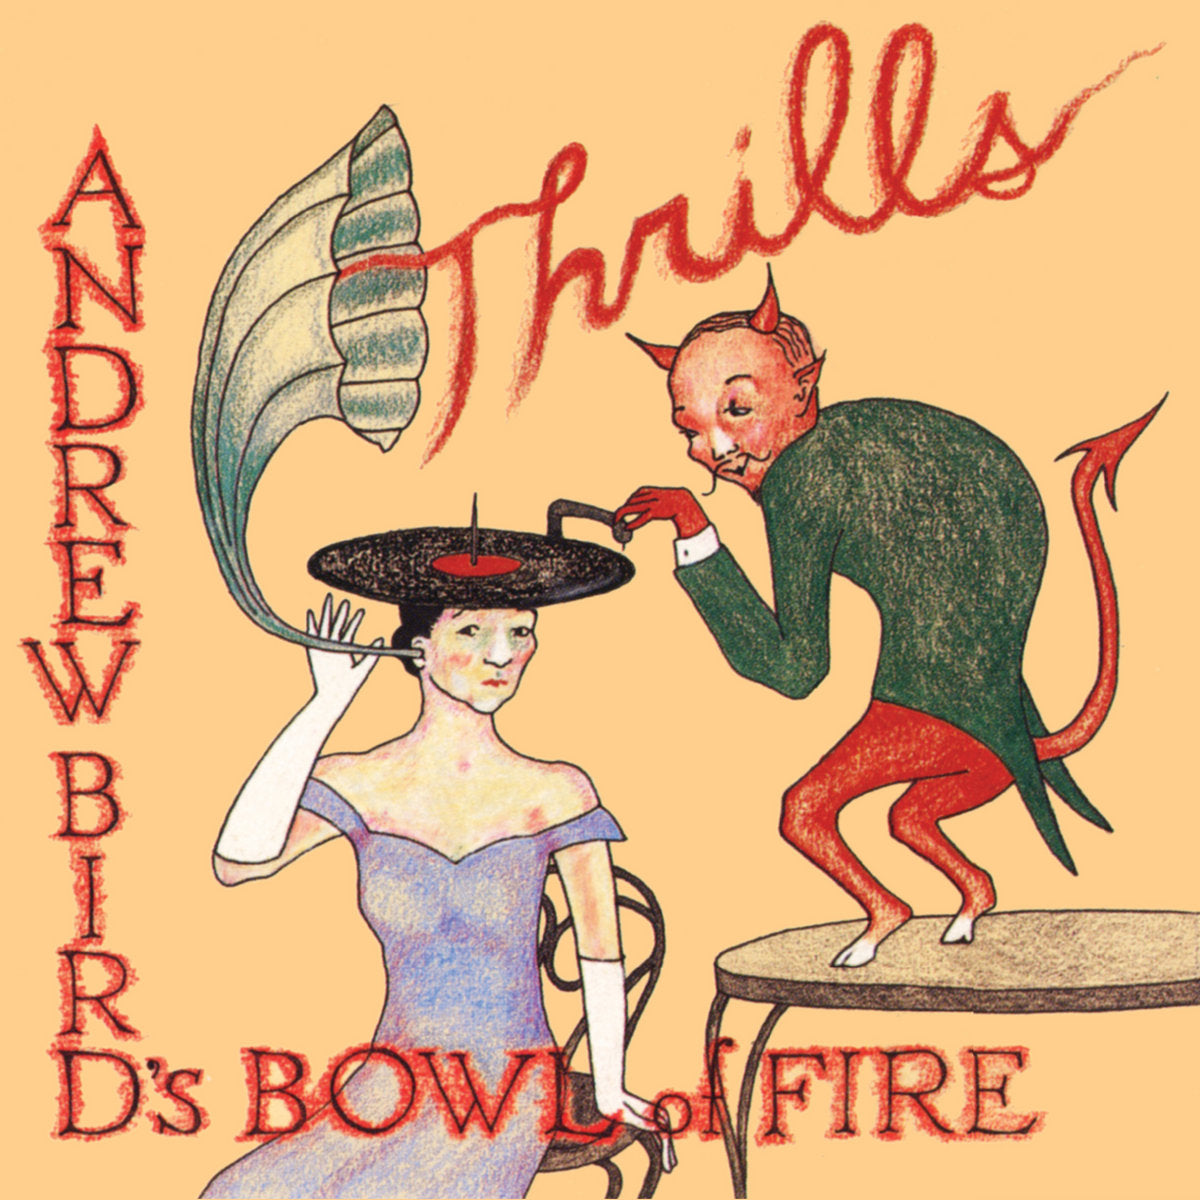 Andrew Bird's Bowl of Fire: Thrills Vinyl LP (Red)